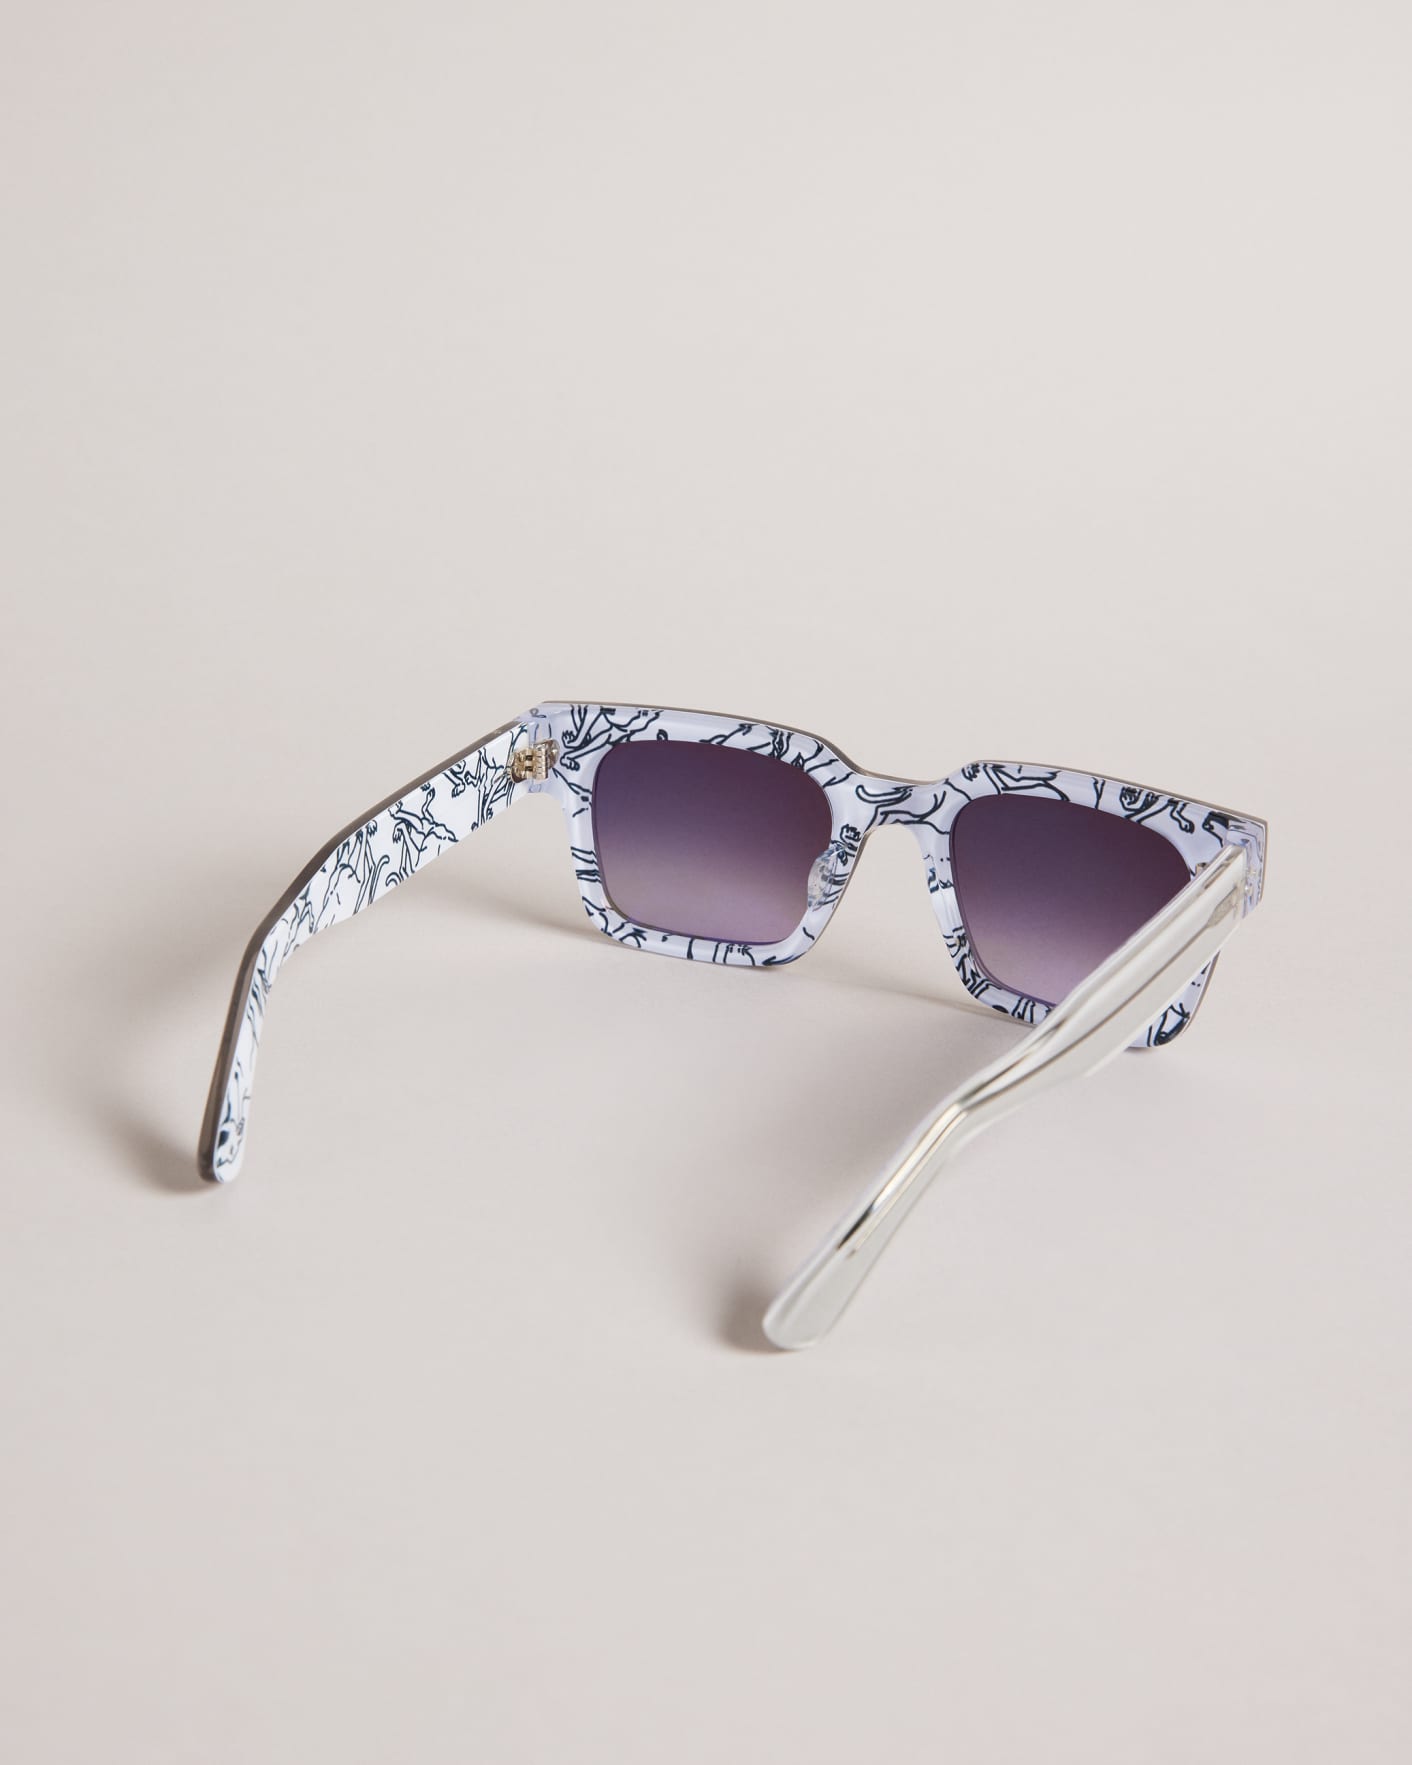 Grey MIB Square Frame Sunglasses Ted Baker